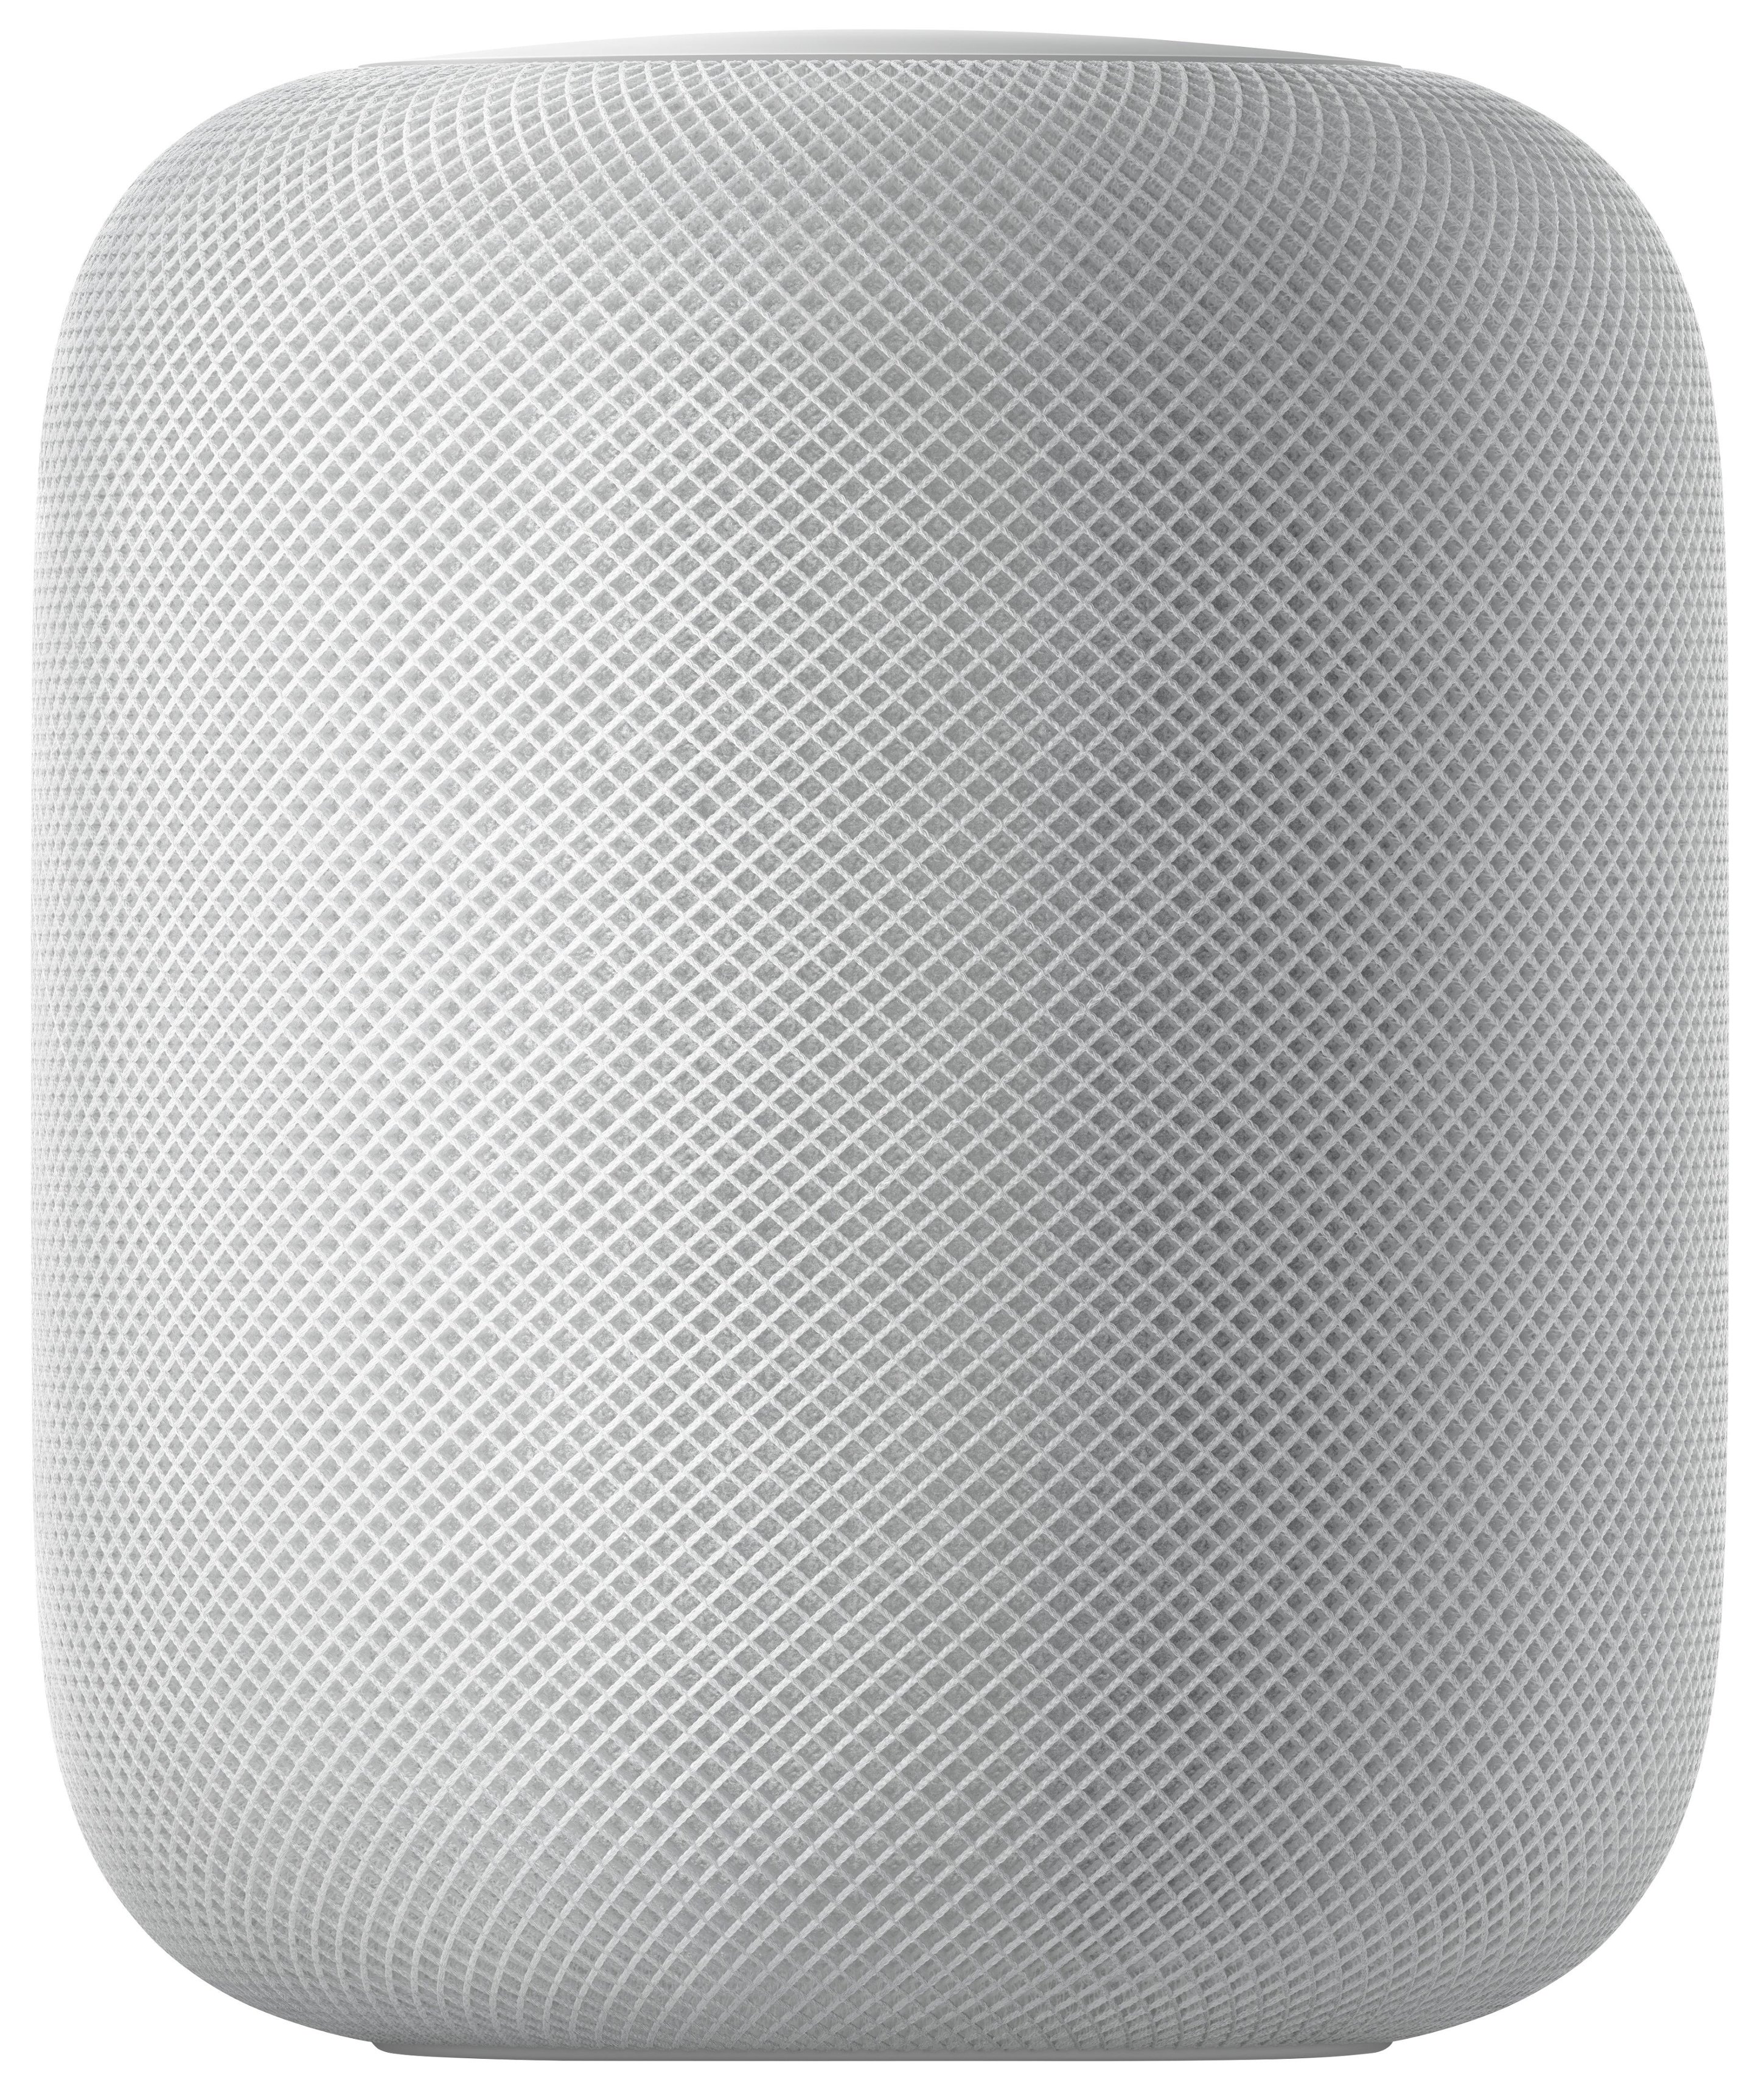 Best Buy: Apple HomePod White MQHV2LL/A